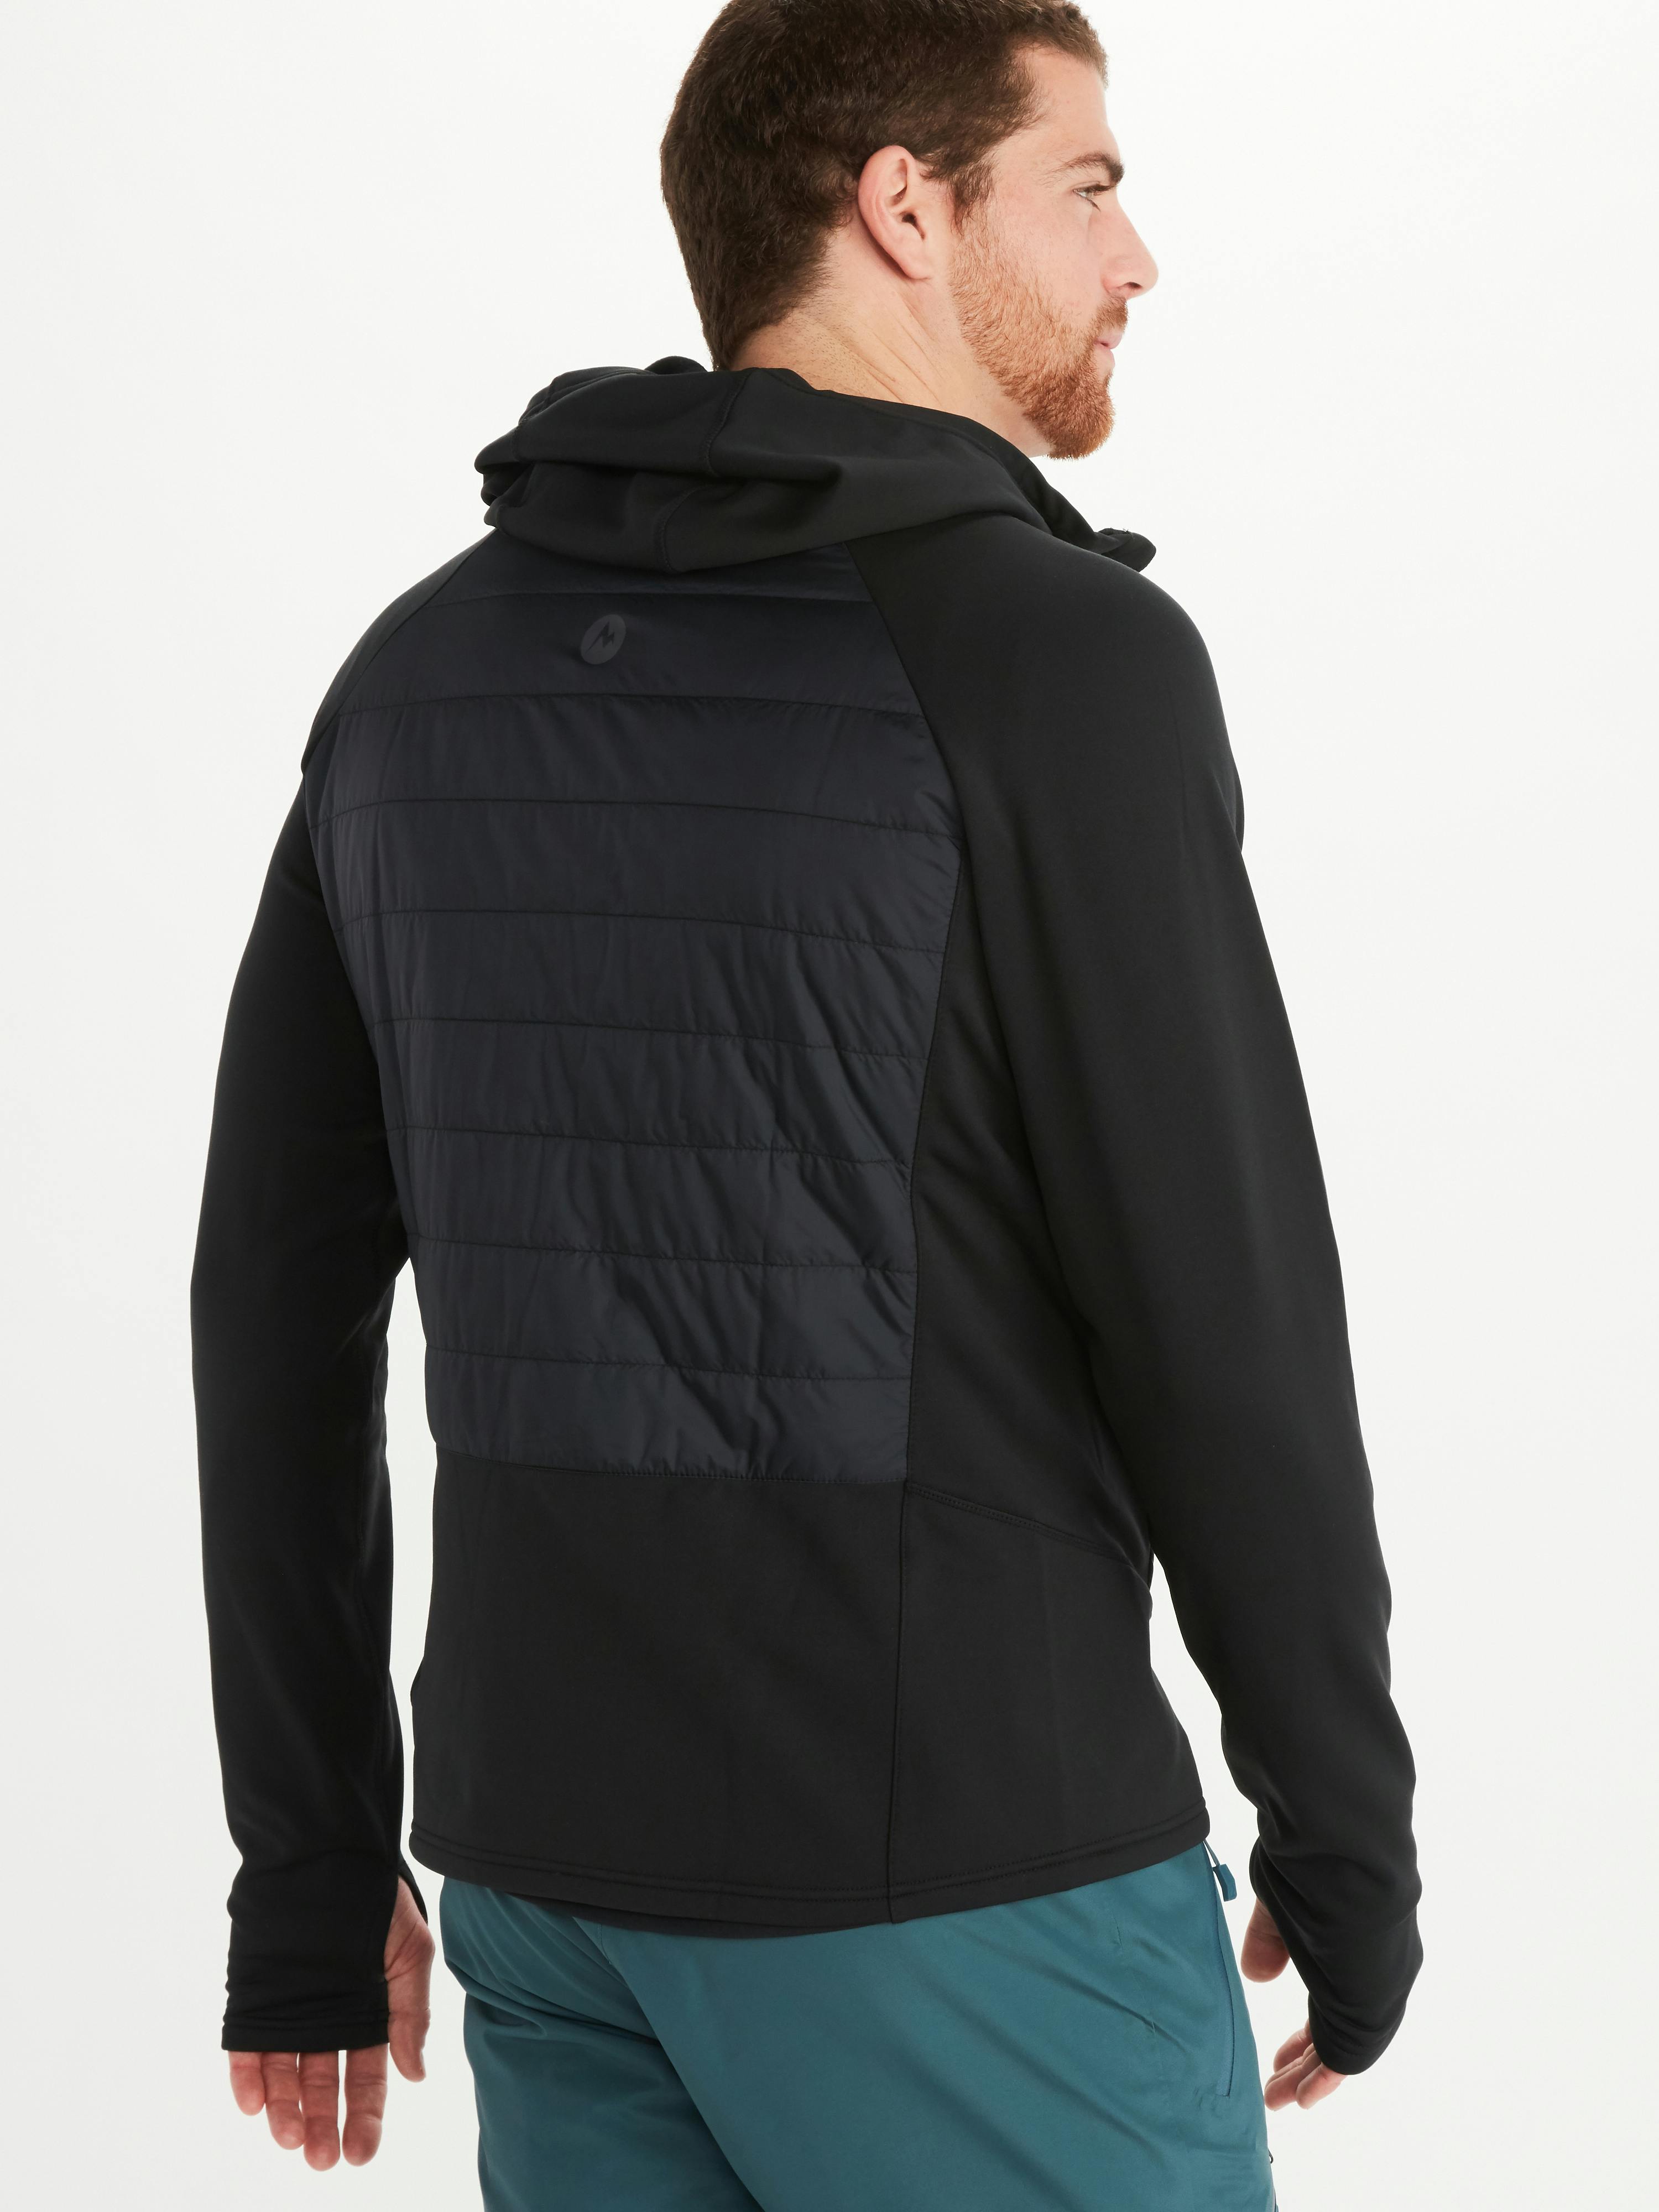 Marmot Men's Variant Hybrid Insulated Jacket